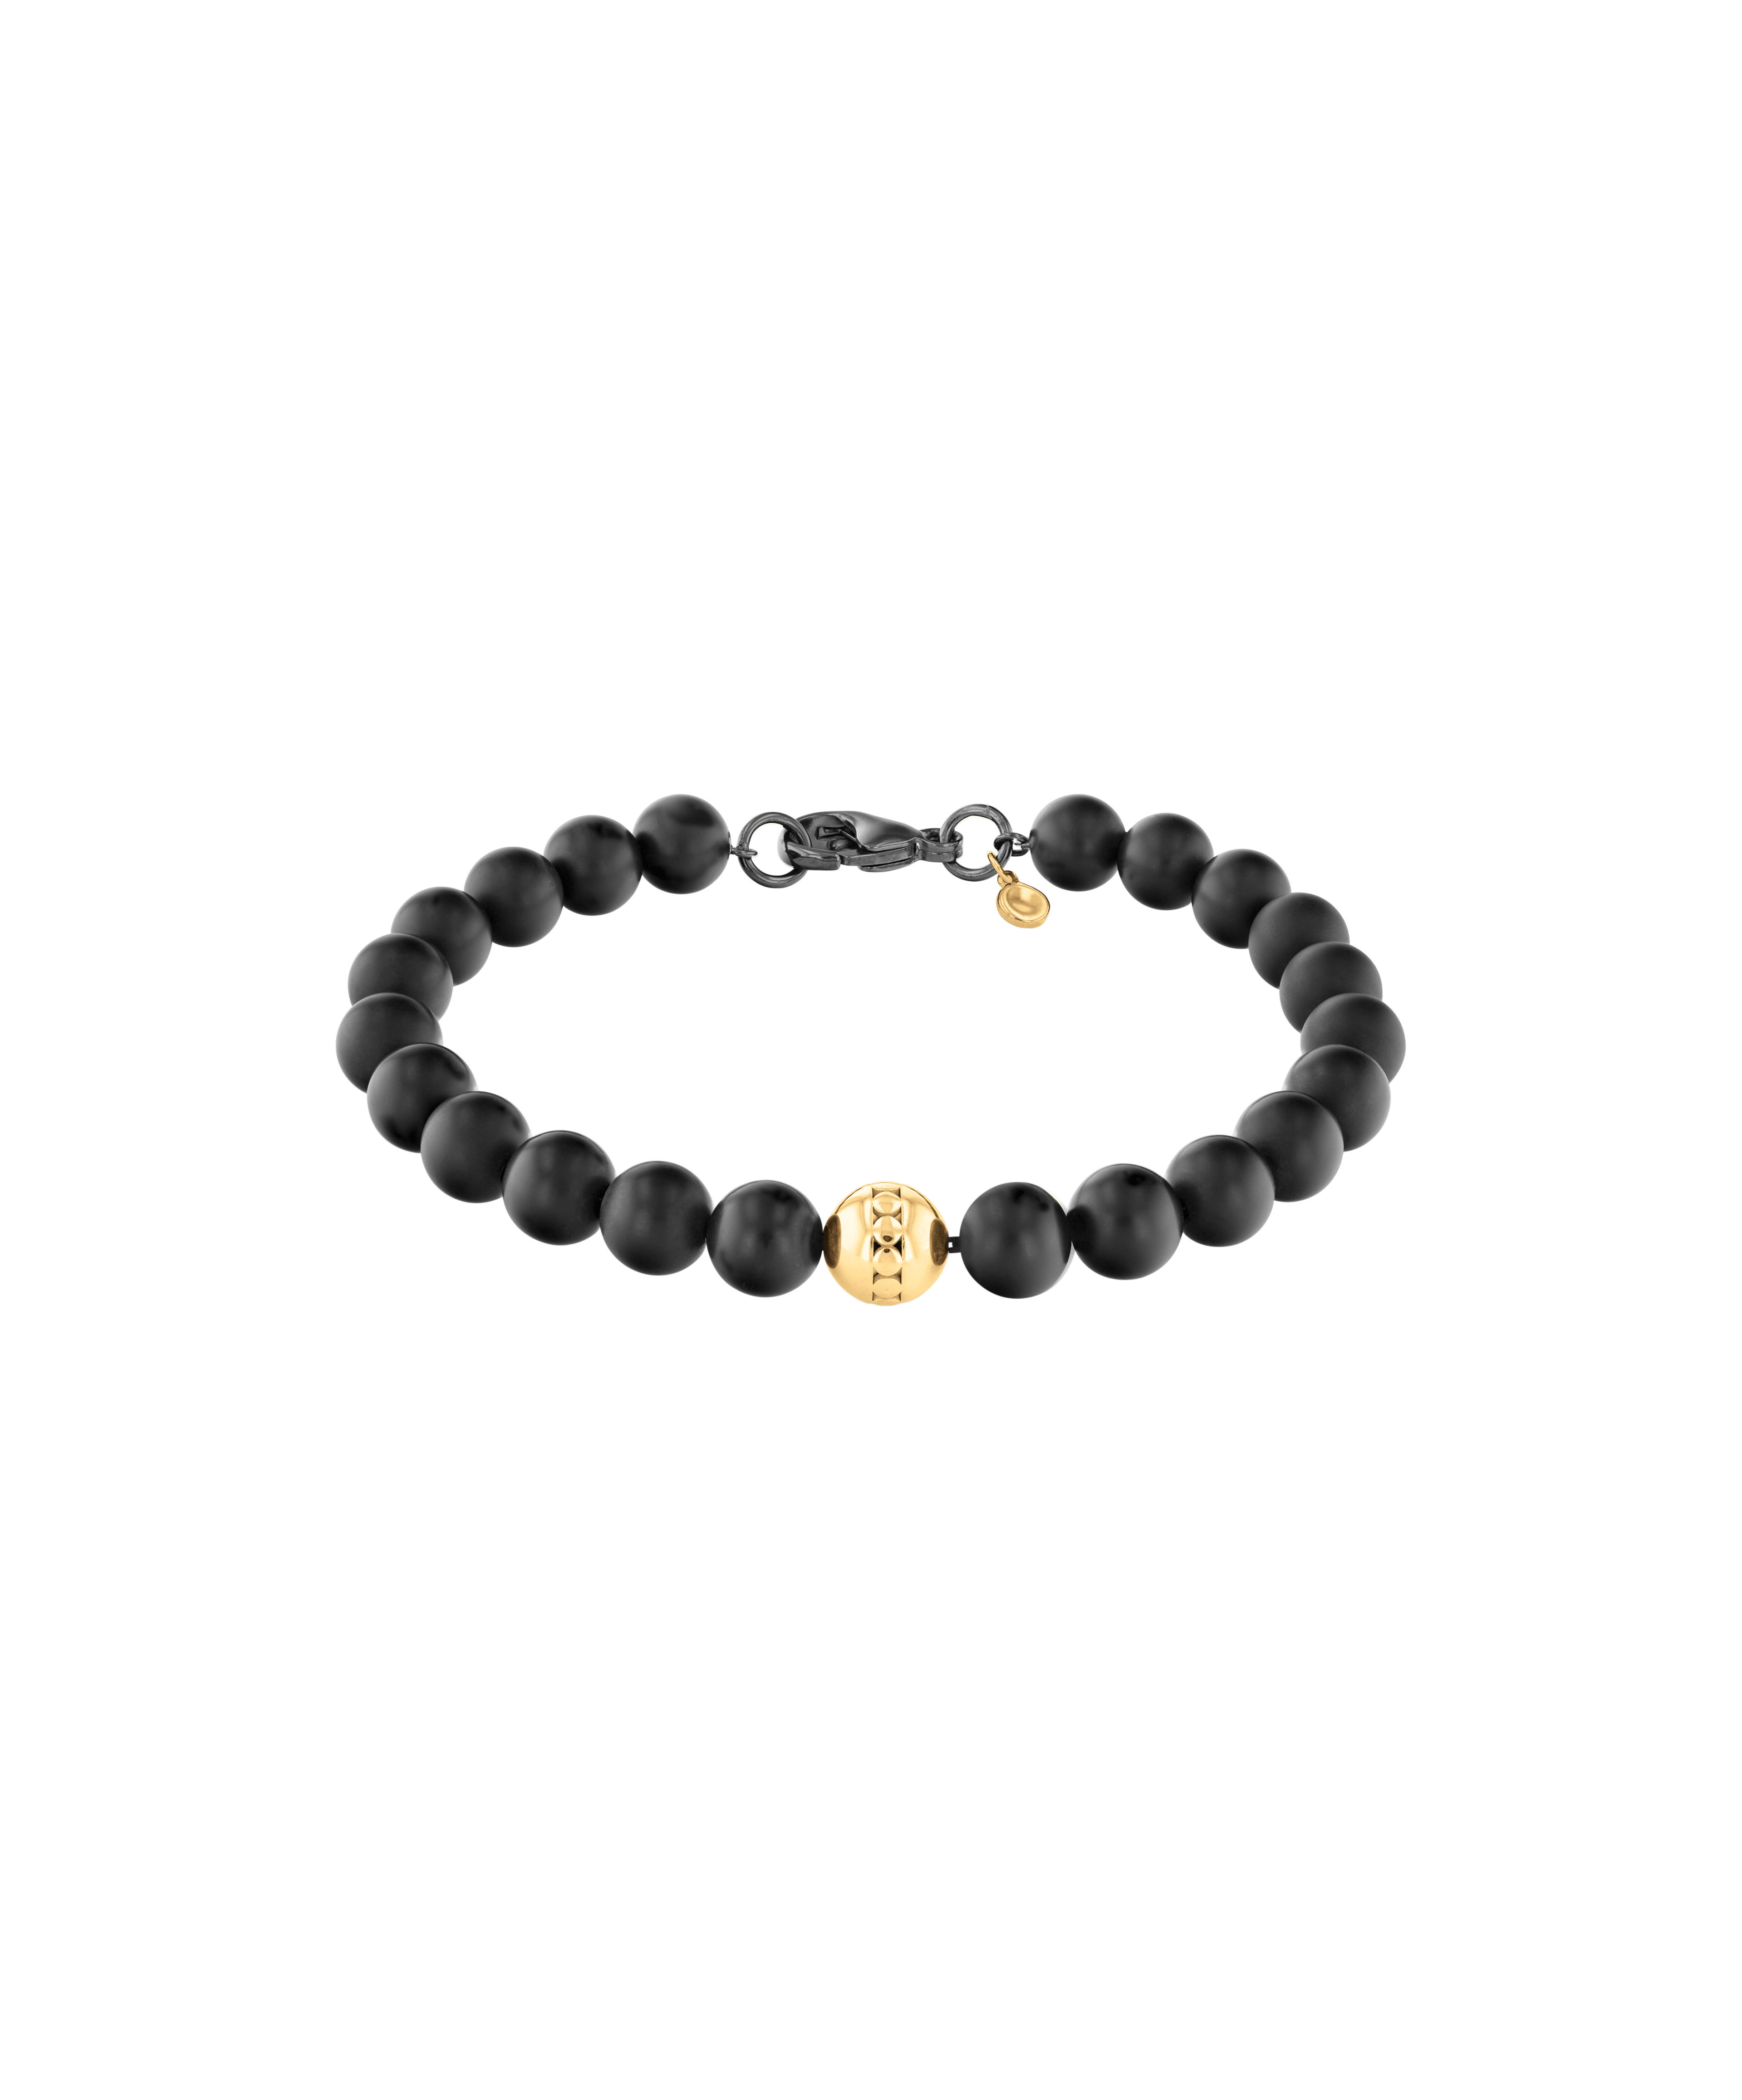 Geometric Crystal Transparent Beads Bracelet Bangle Women Gift